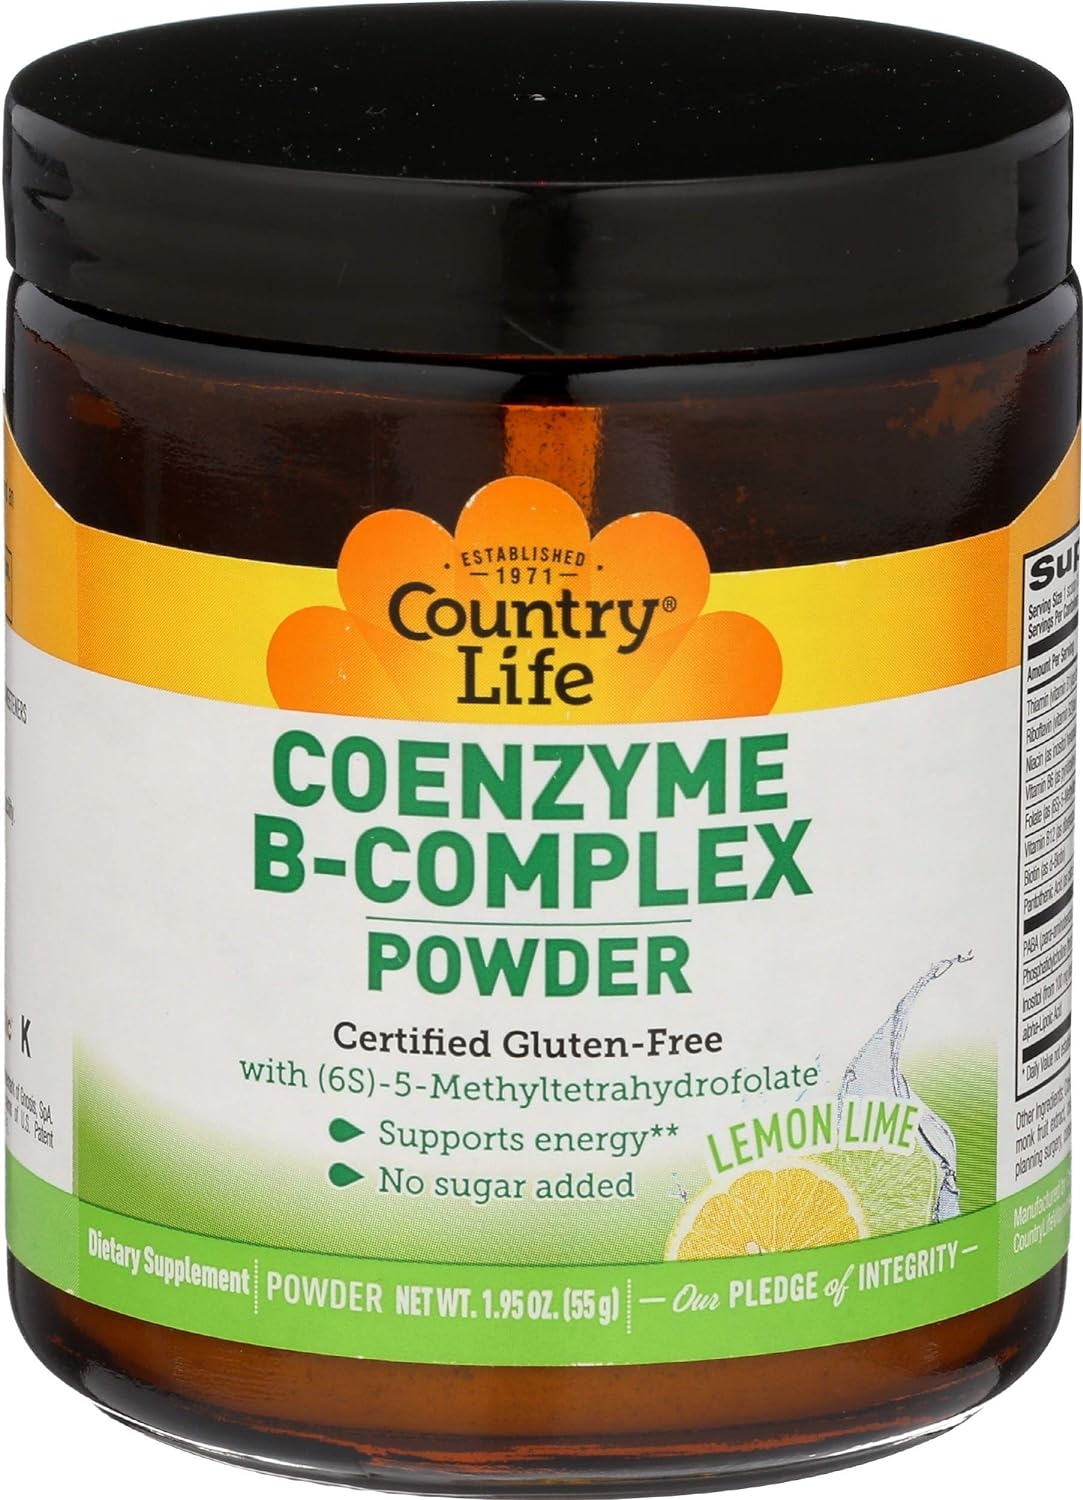 Country Life Coenzyme B-Complex Coconut 1.95 oz z (55g) Powder